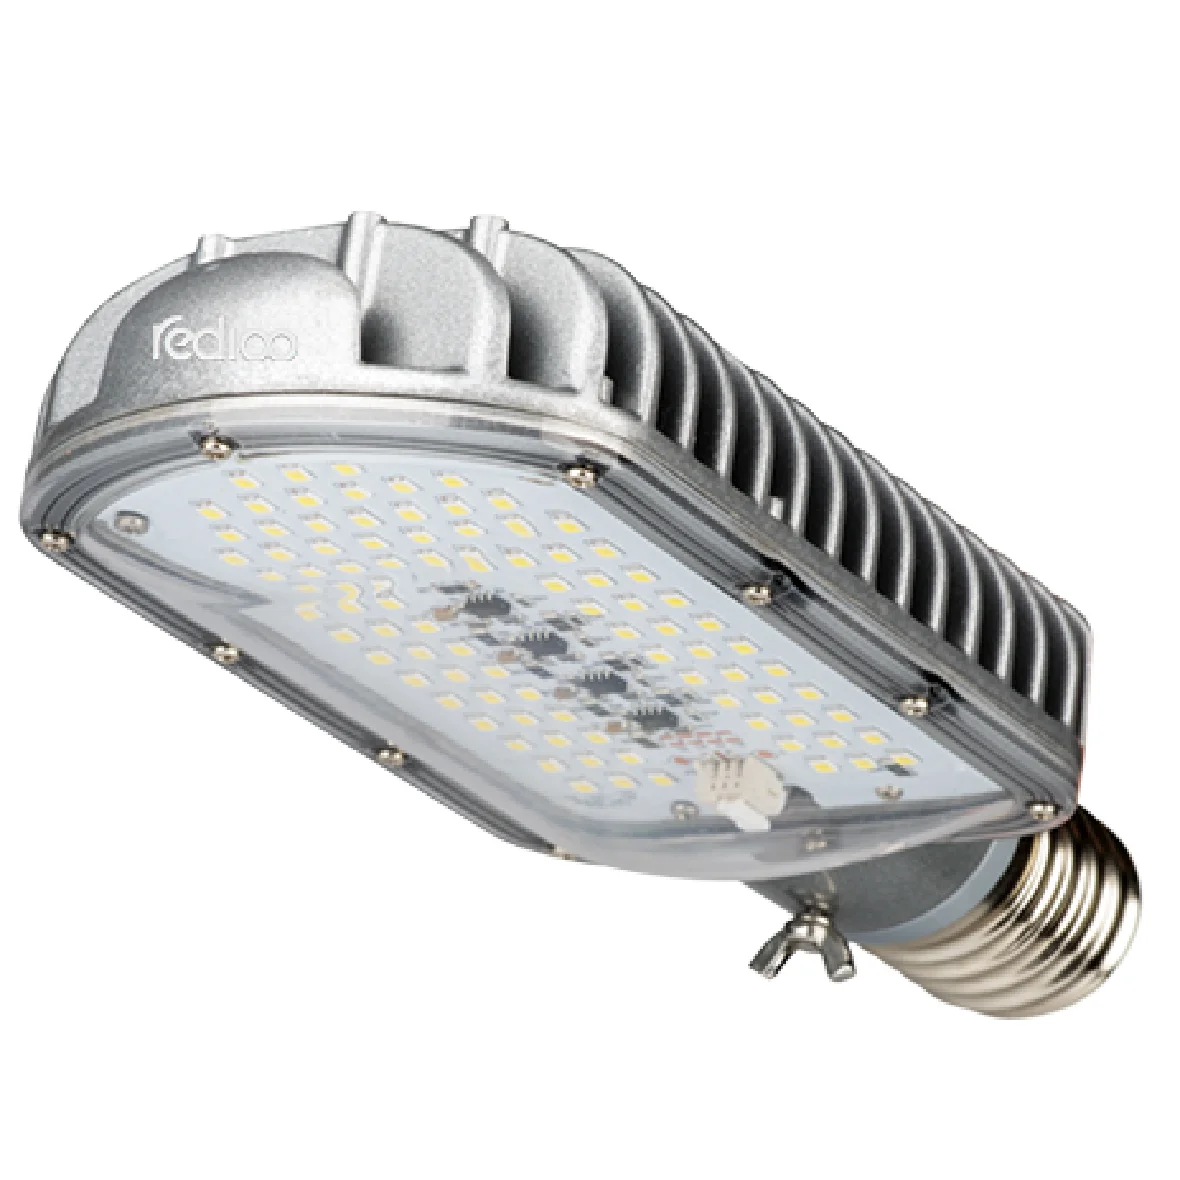 2020 high quality hot selling energy saving street light security bulb